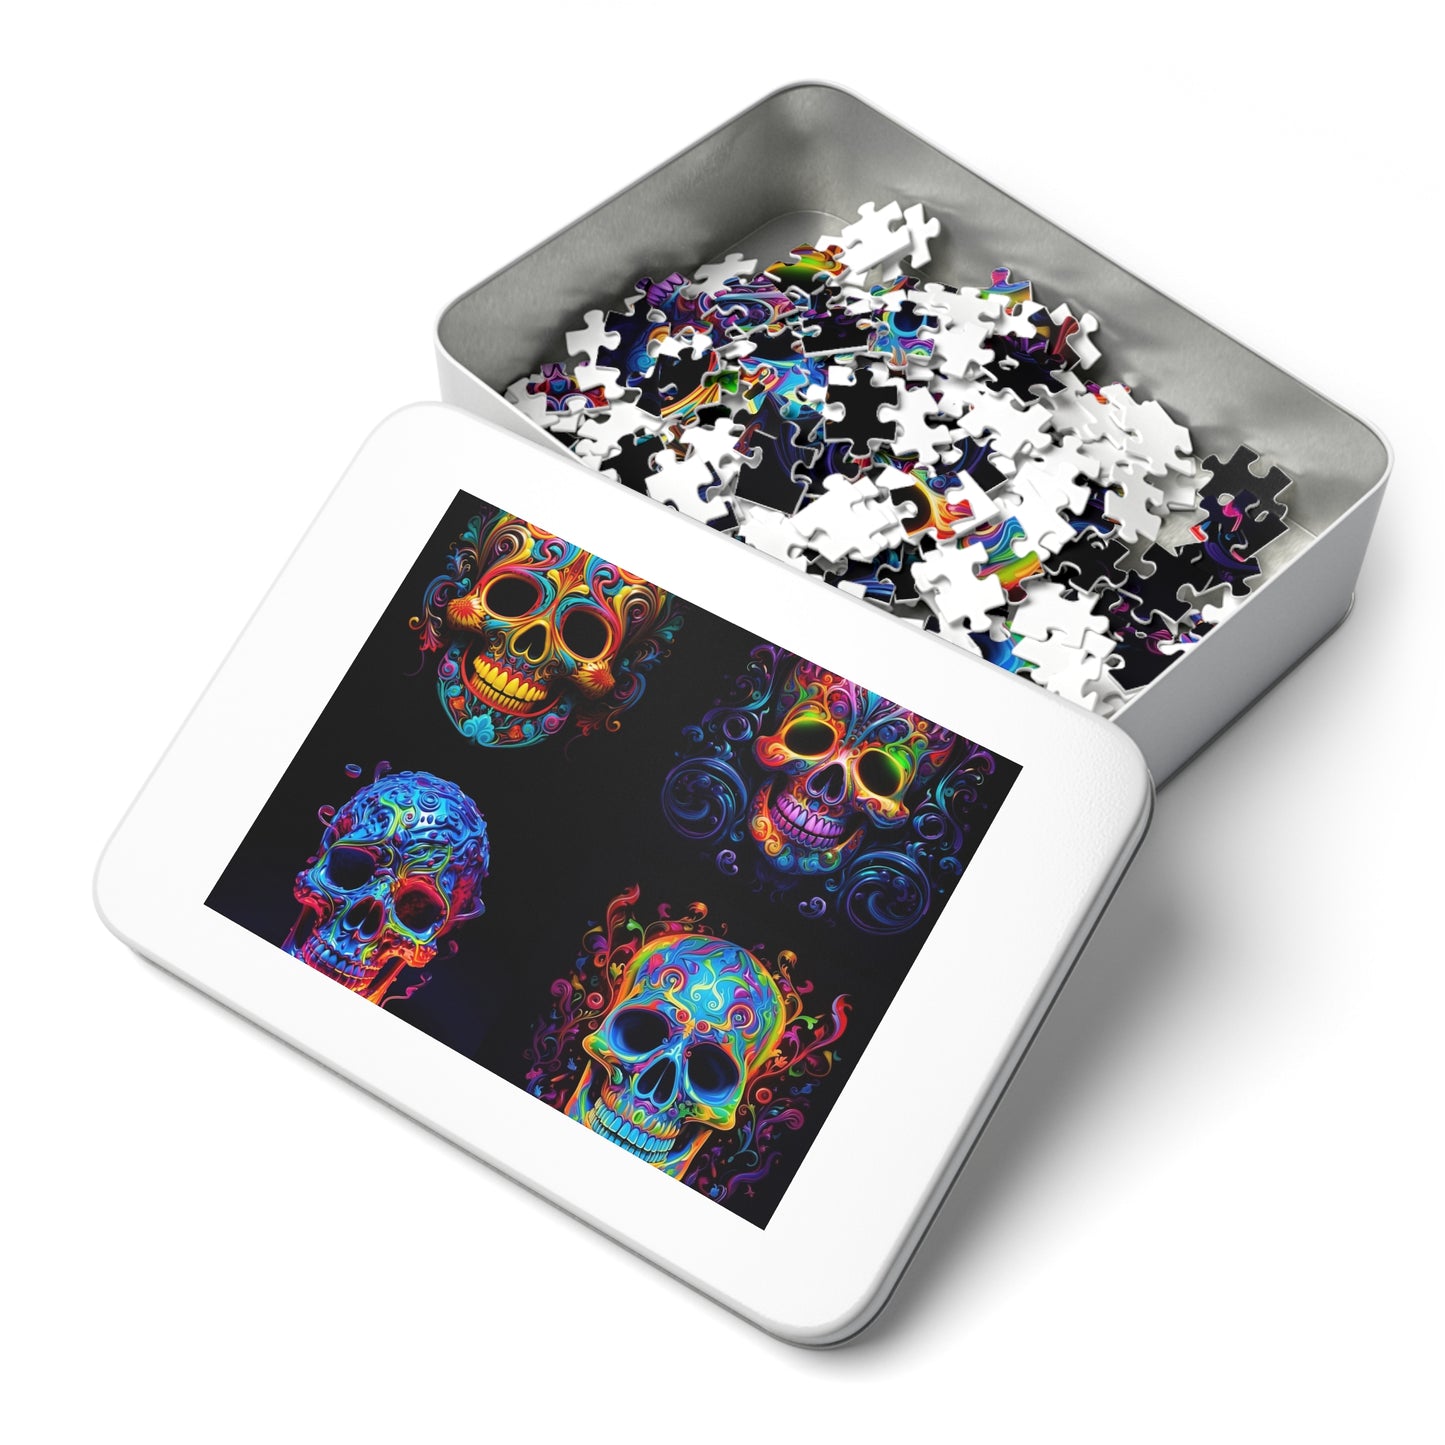 Jigsaw Puzzle (30, 110, 252, 500,1000-Piece) Macro Skull Color 5